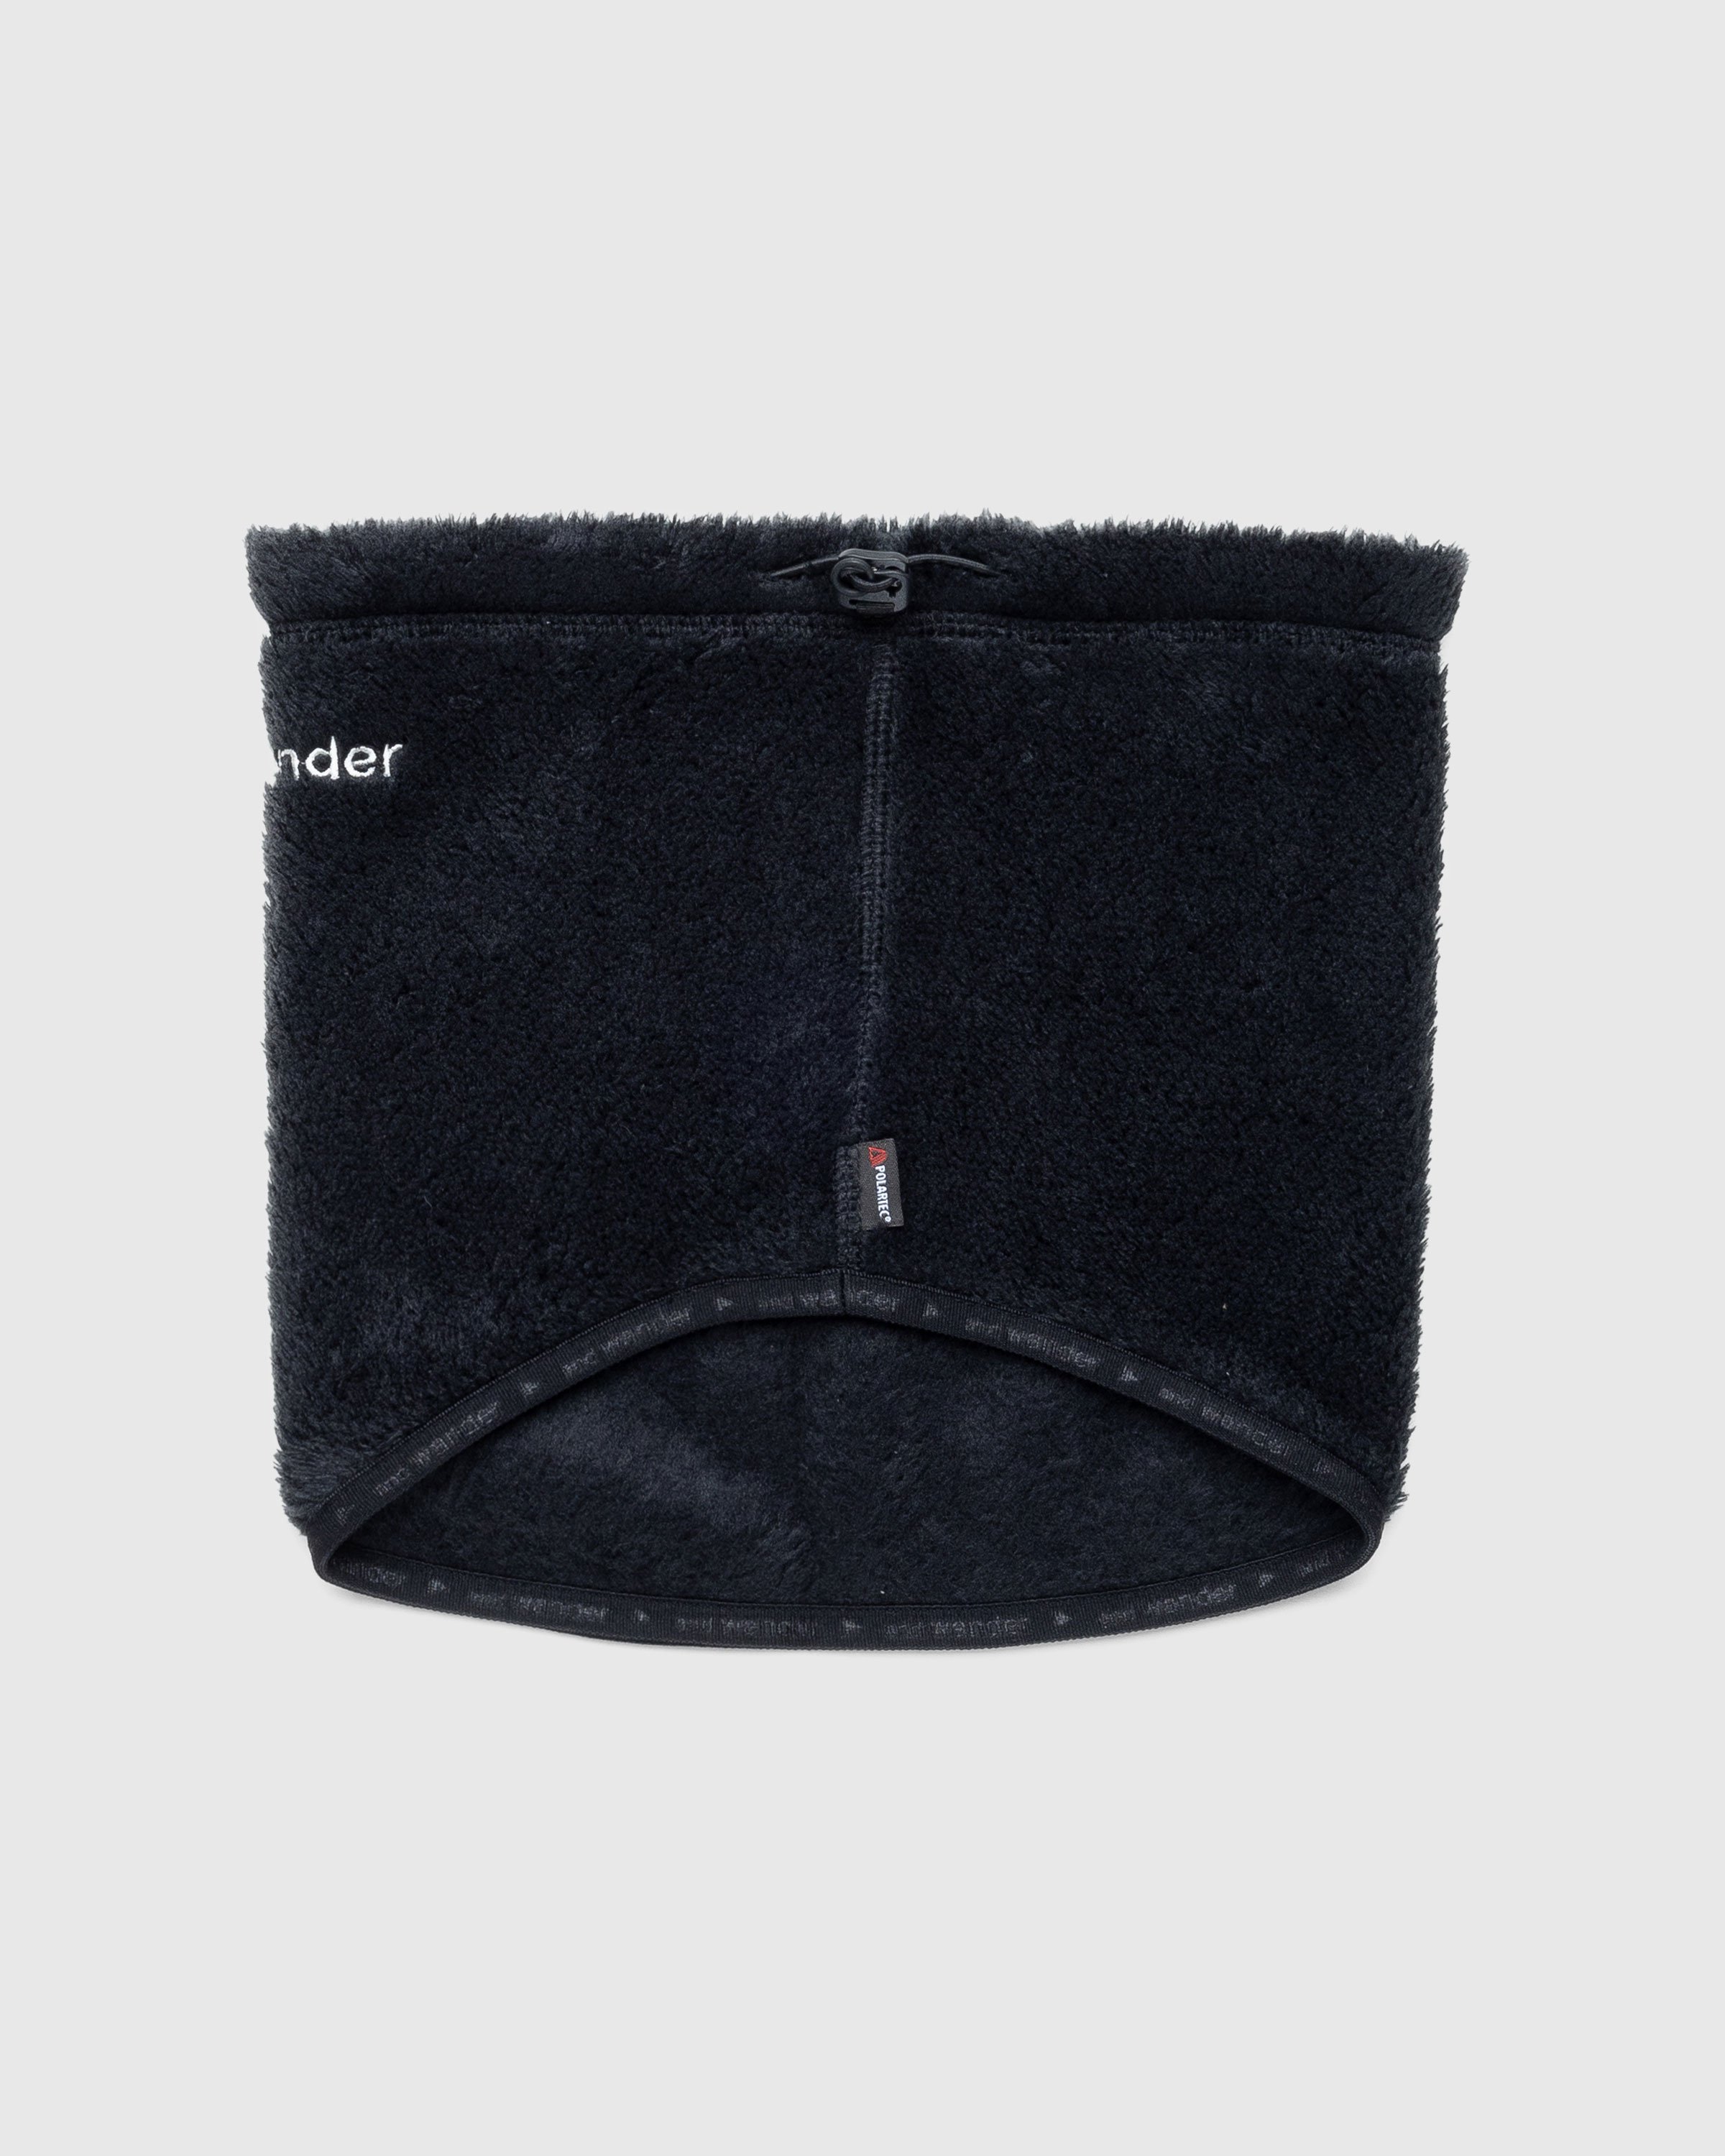 And Wander - High Loft Fleece Neck Warmer Black - Accessories - Black - Image 2